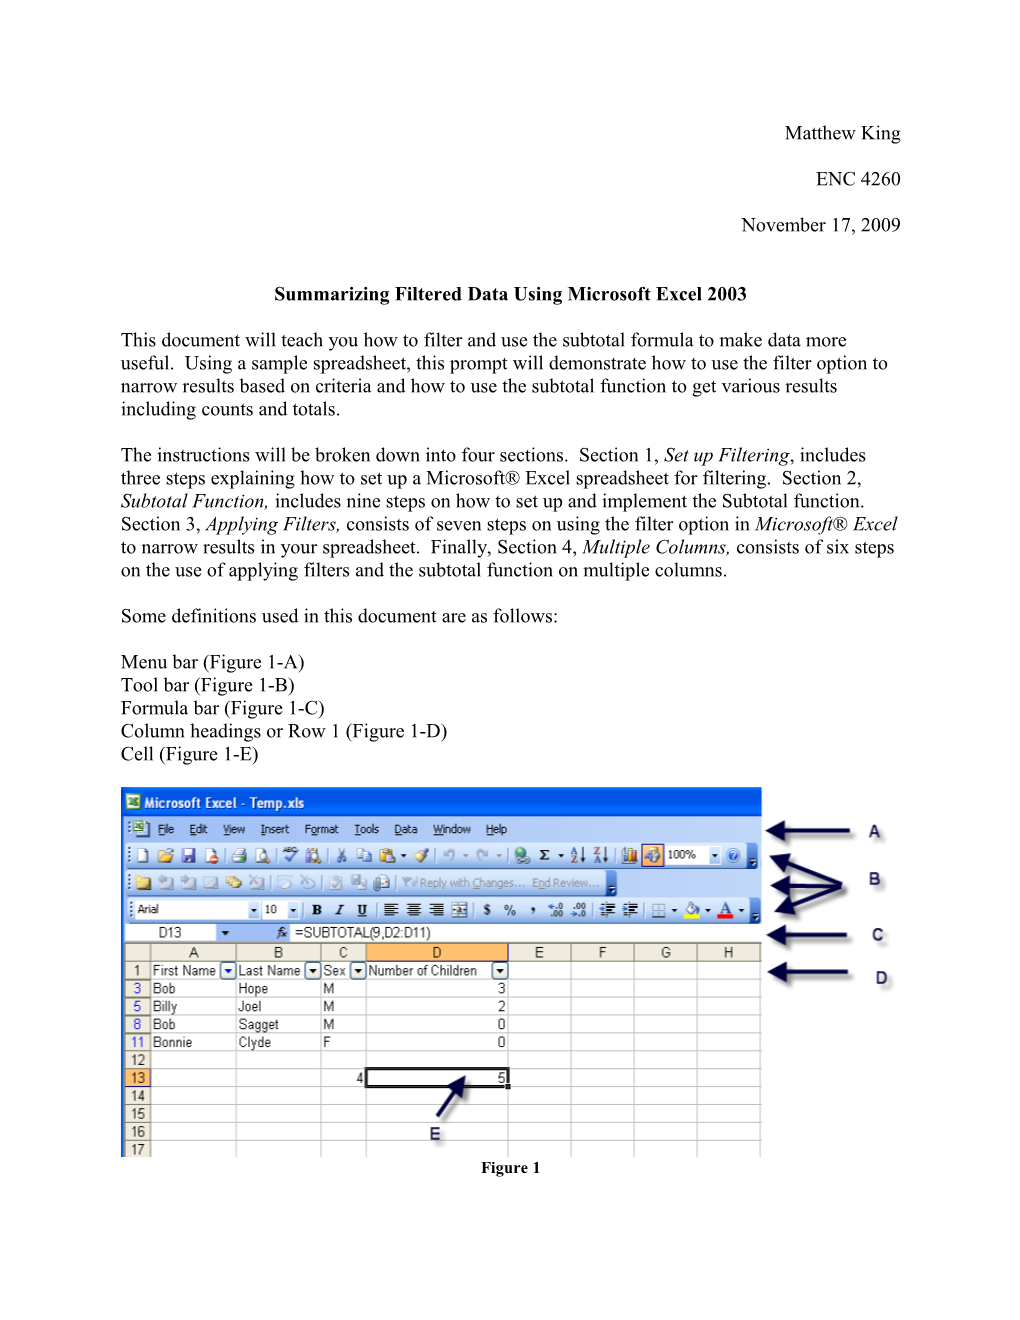 Summarizing Filtered Data Using Microsoft Excel 2003